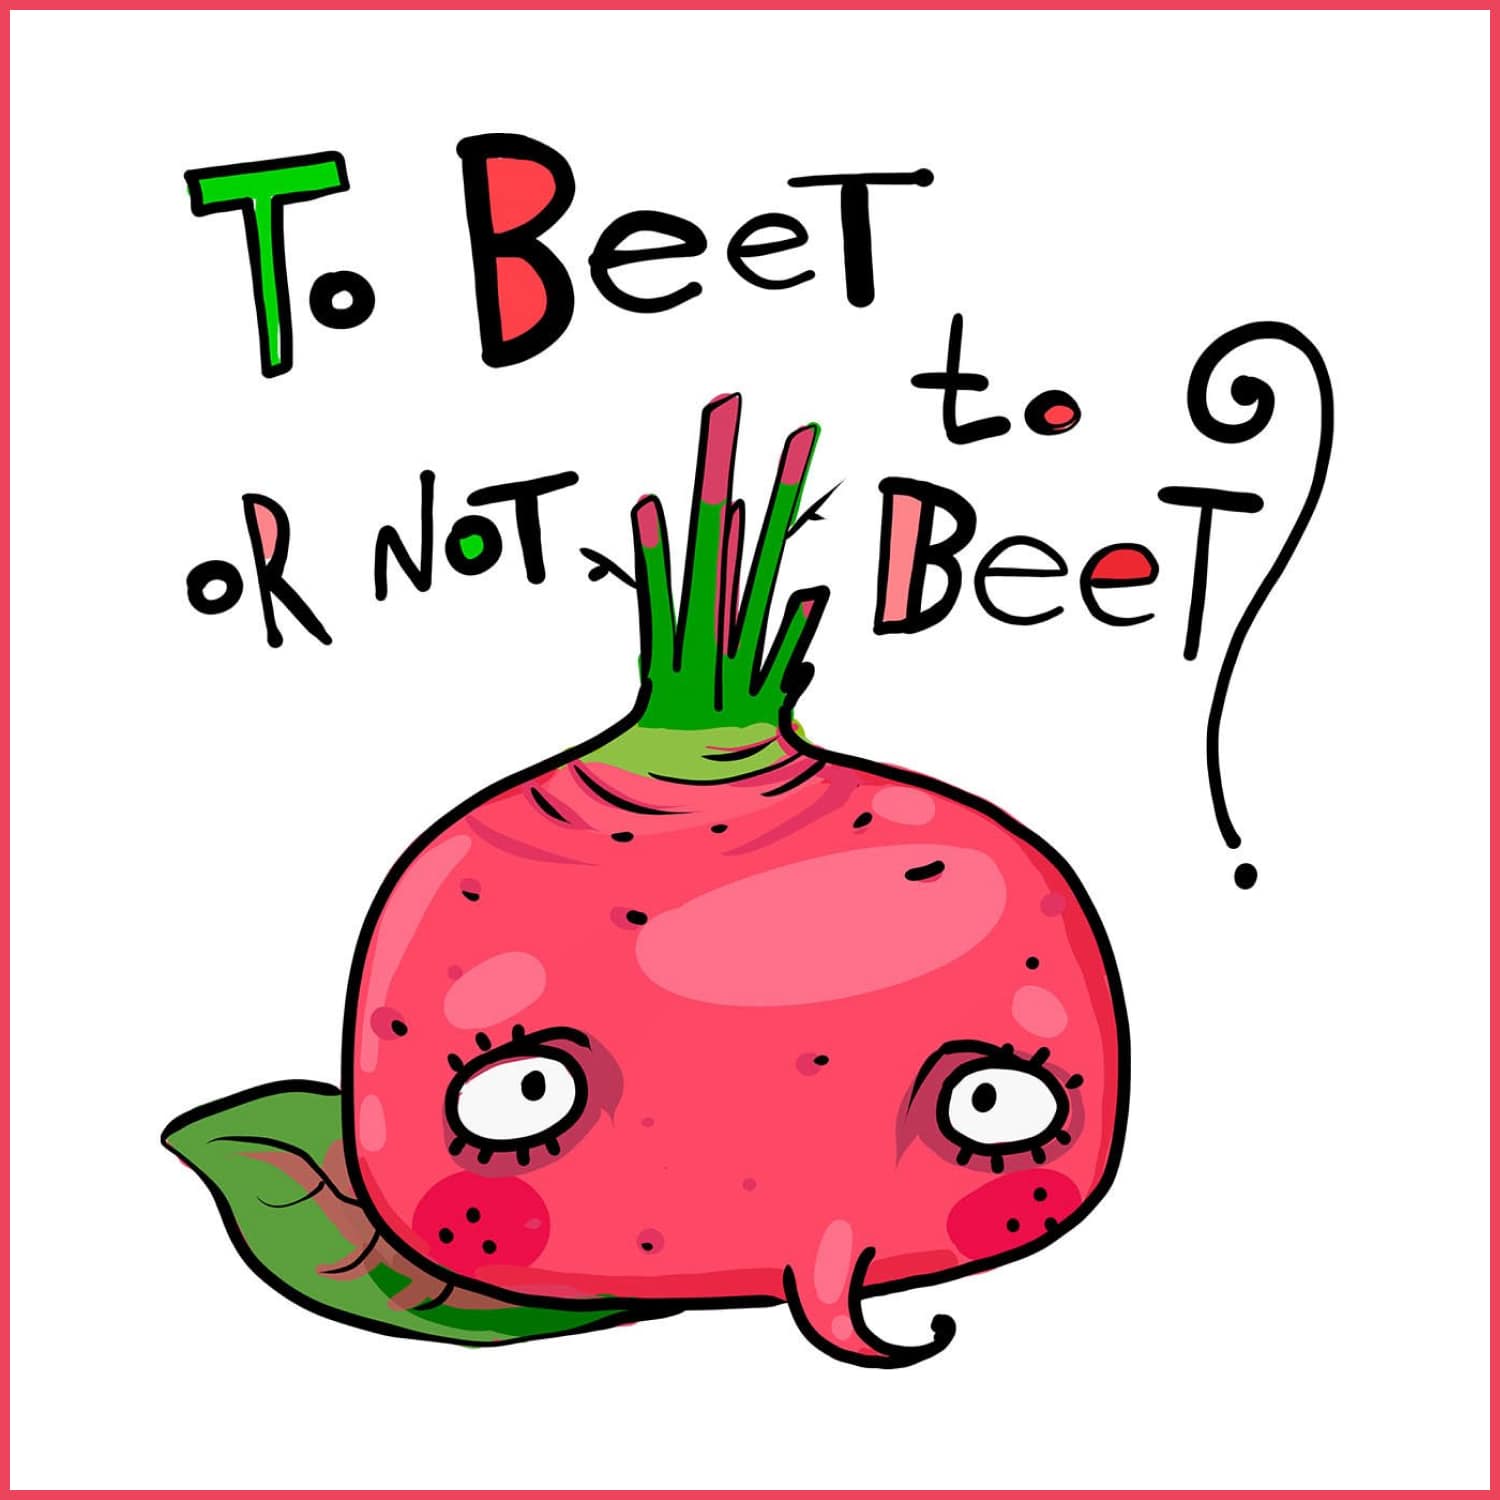 Little red beet - illustration cover.